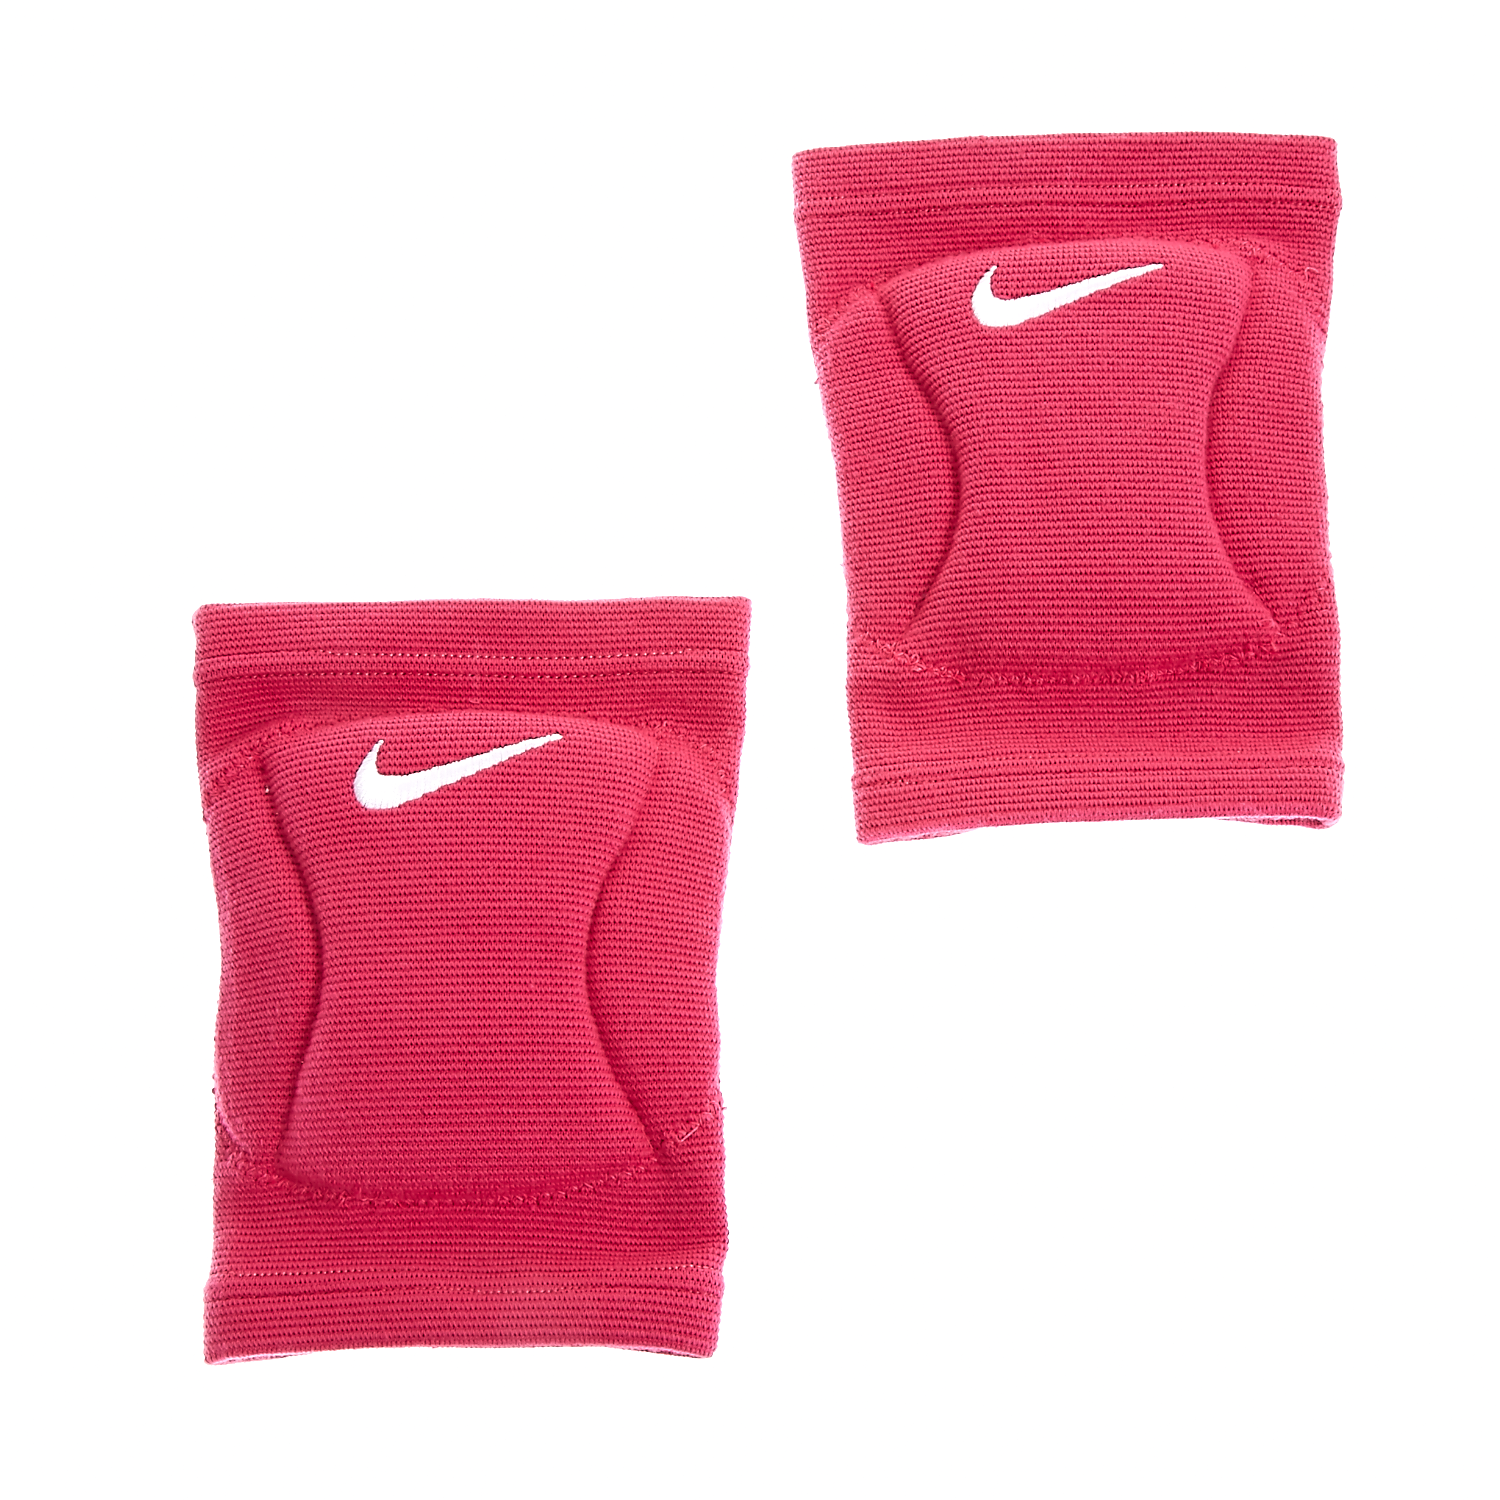 NIKE – Επιγονατίδες Nike ροζ